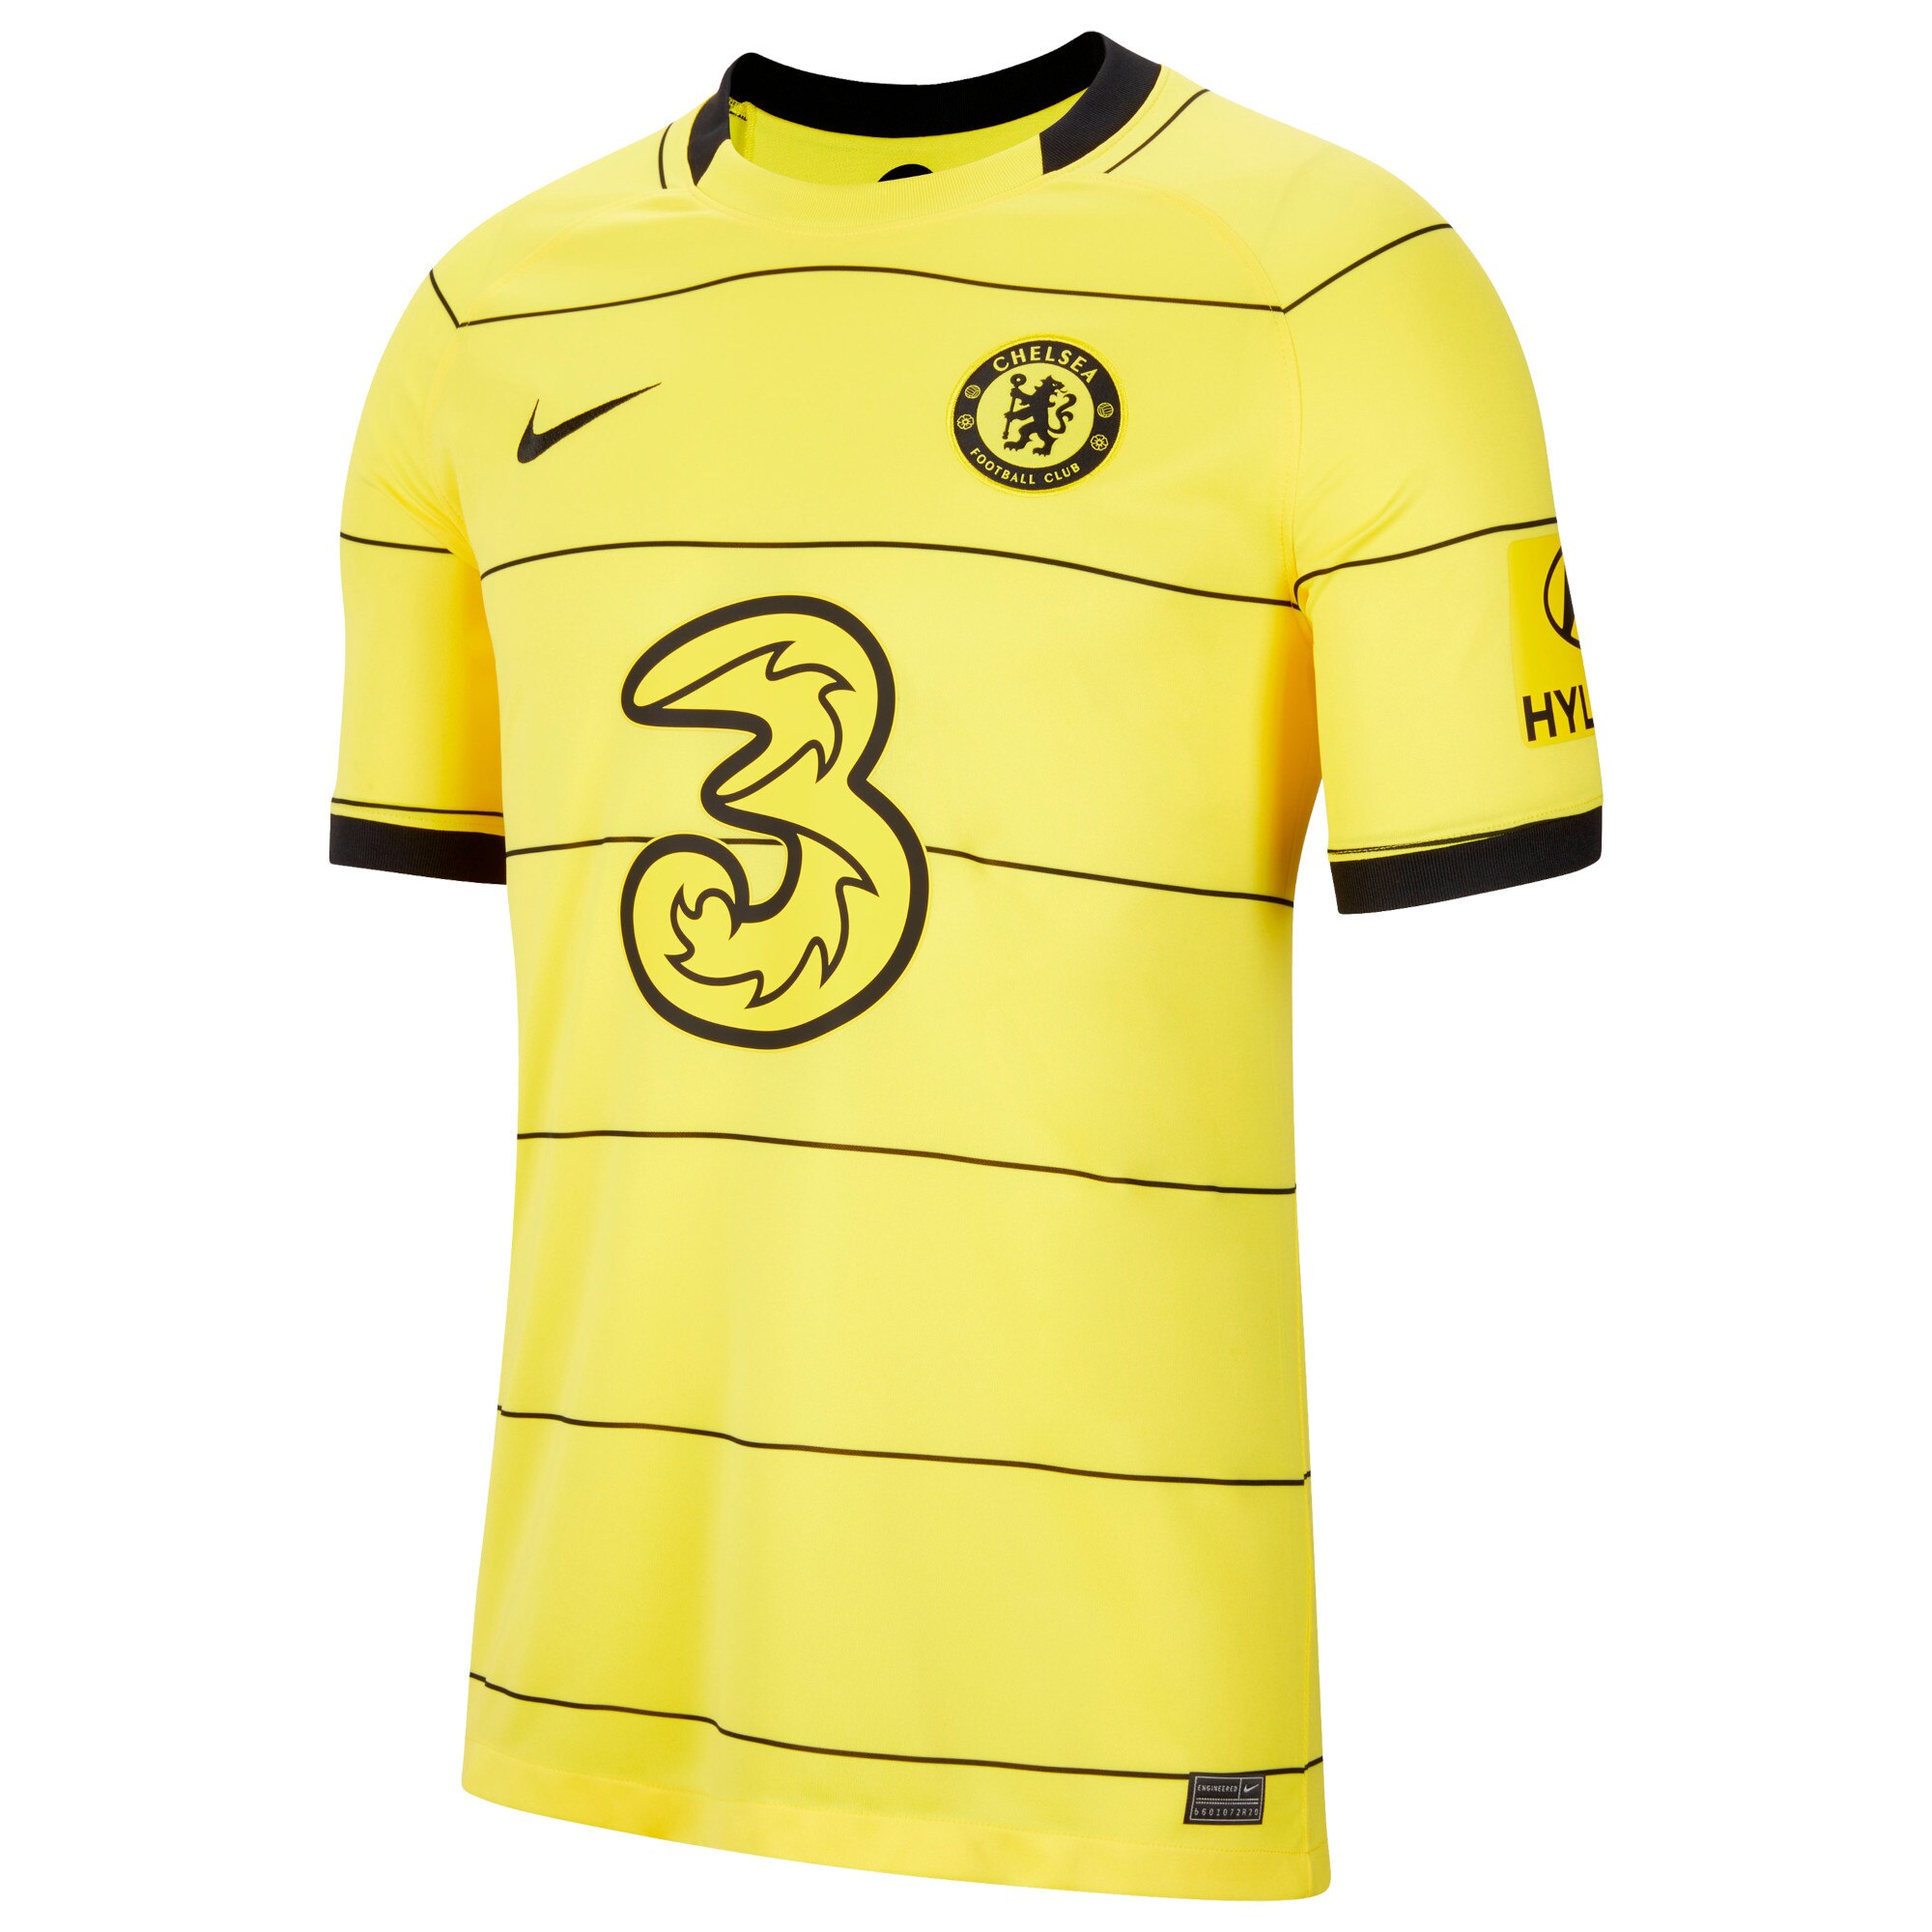 Chelsea Cup Away Stadium Shirt 2021-22 with Sharman-lowe 60 printing